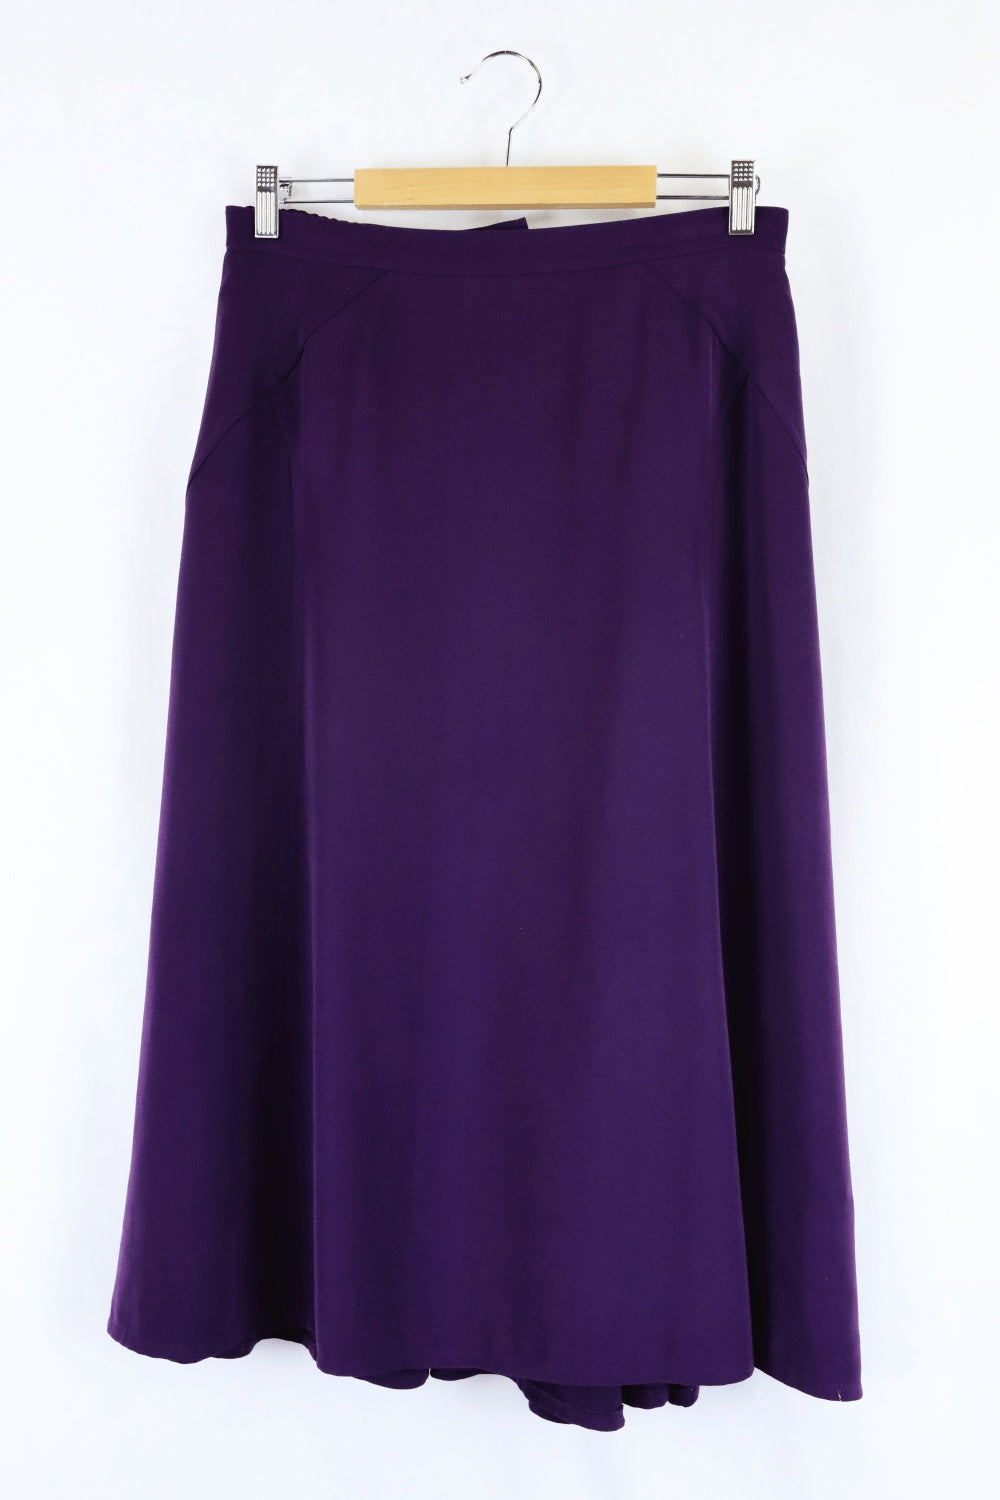 Fella Hamilton Purple Long Skirt 8